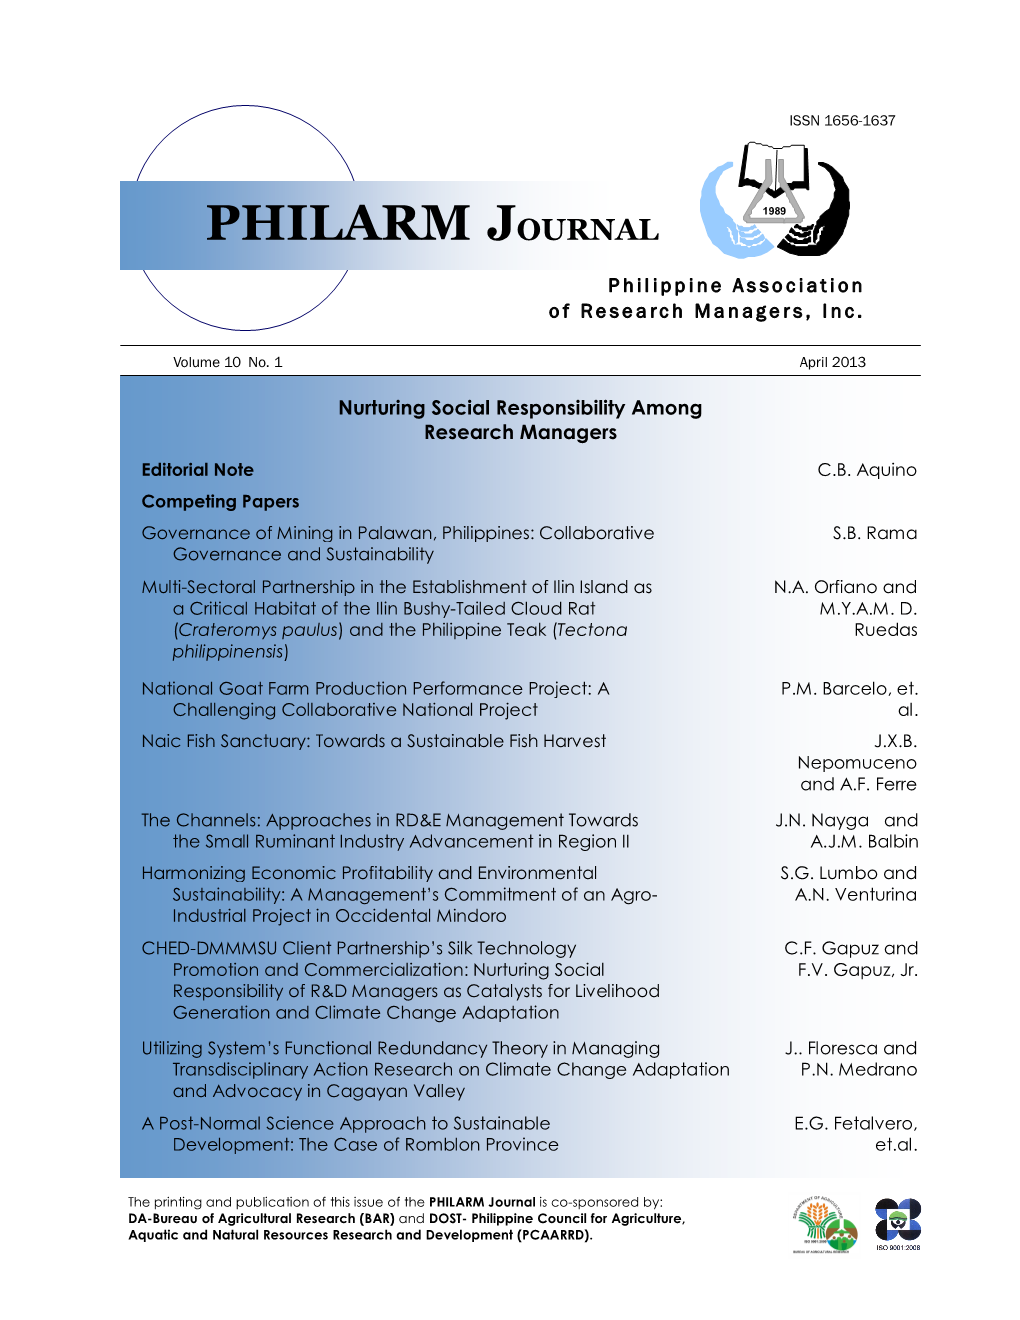 Philarm Journal